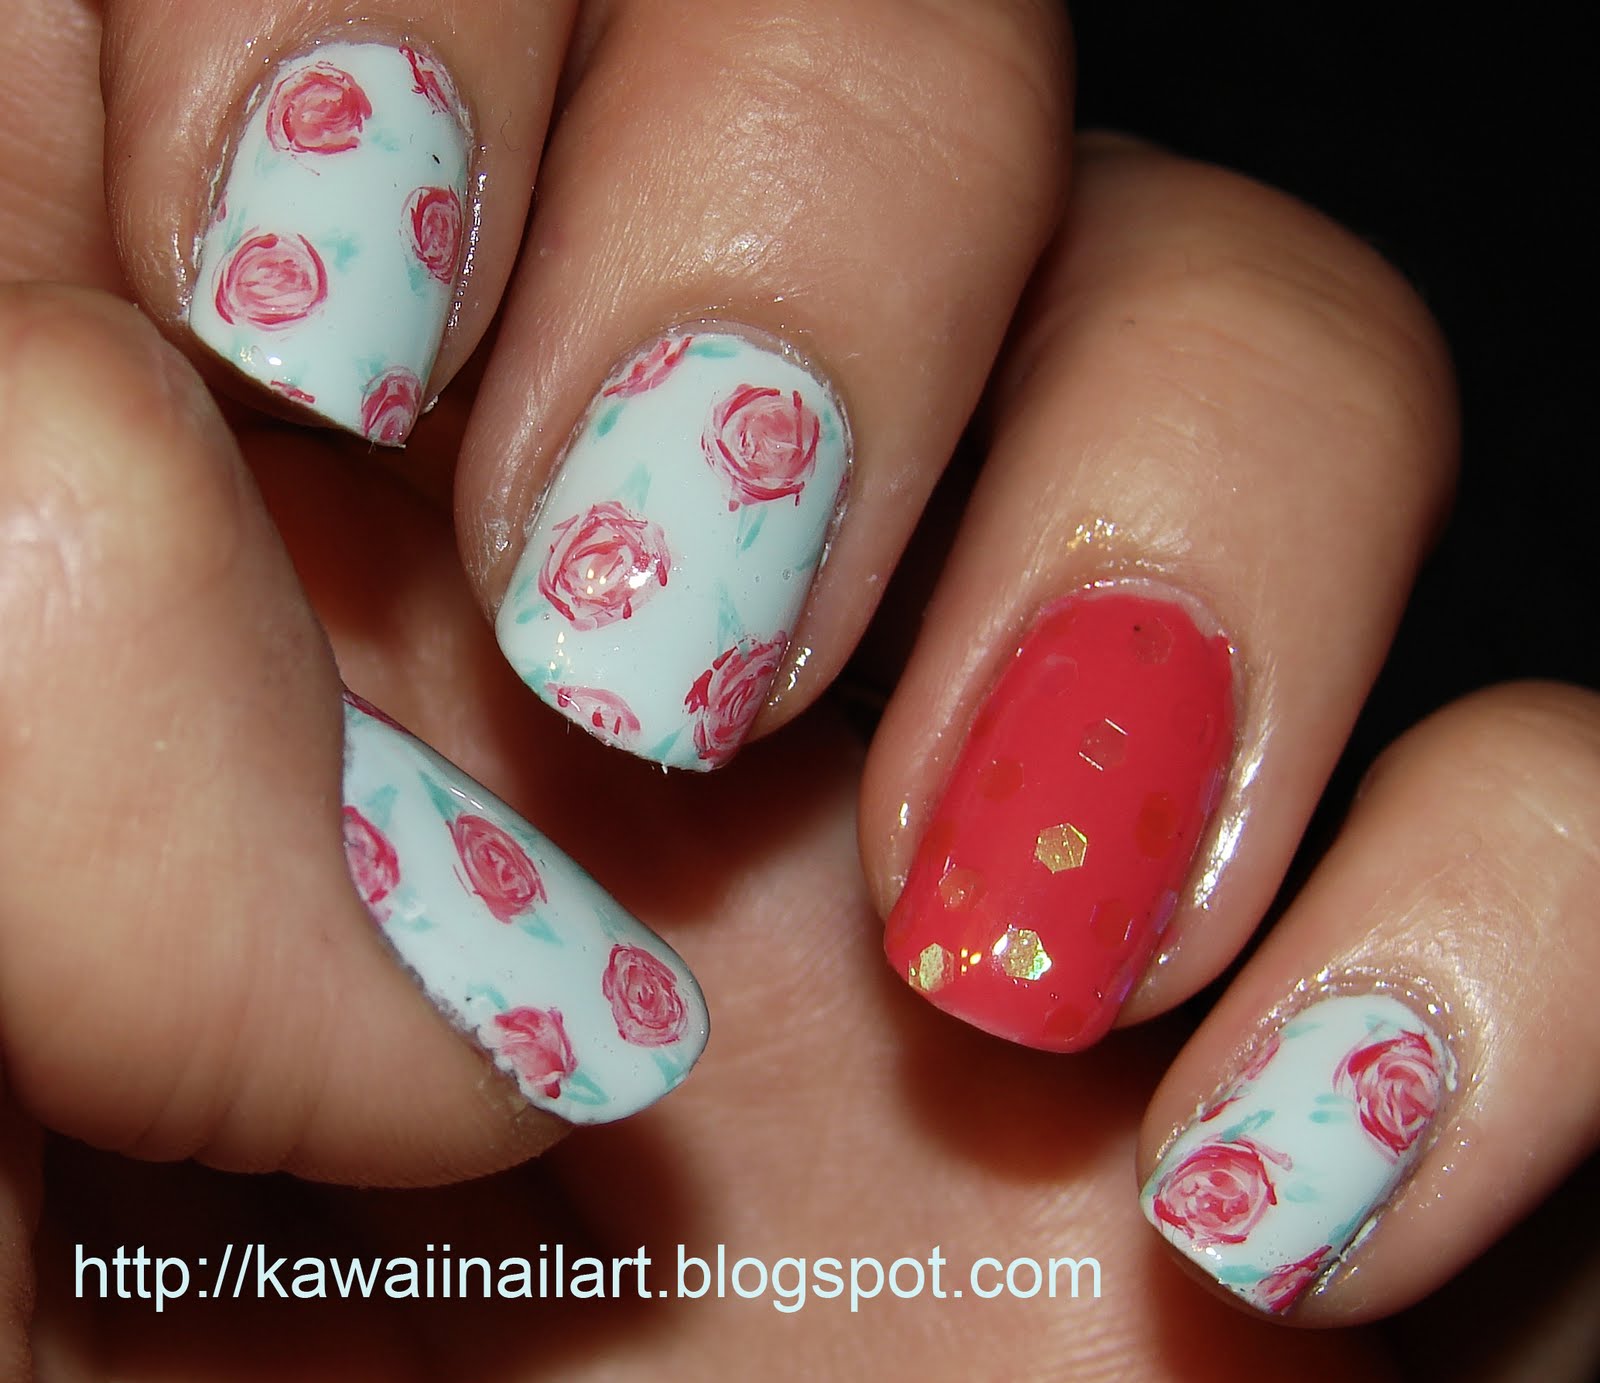 White & Pink Roses Nailart Design -My Birthday Nails - YouTube